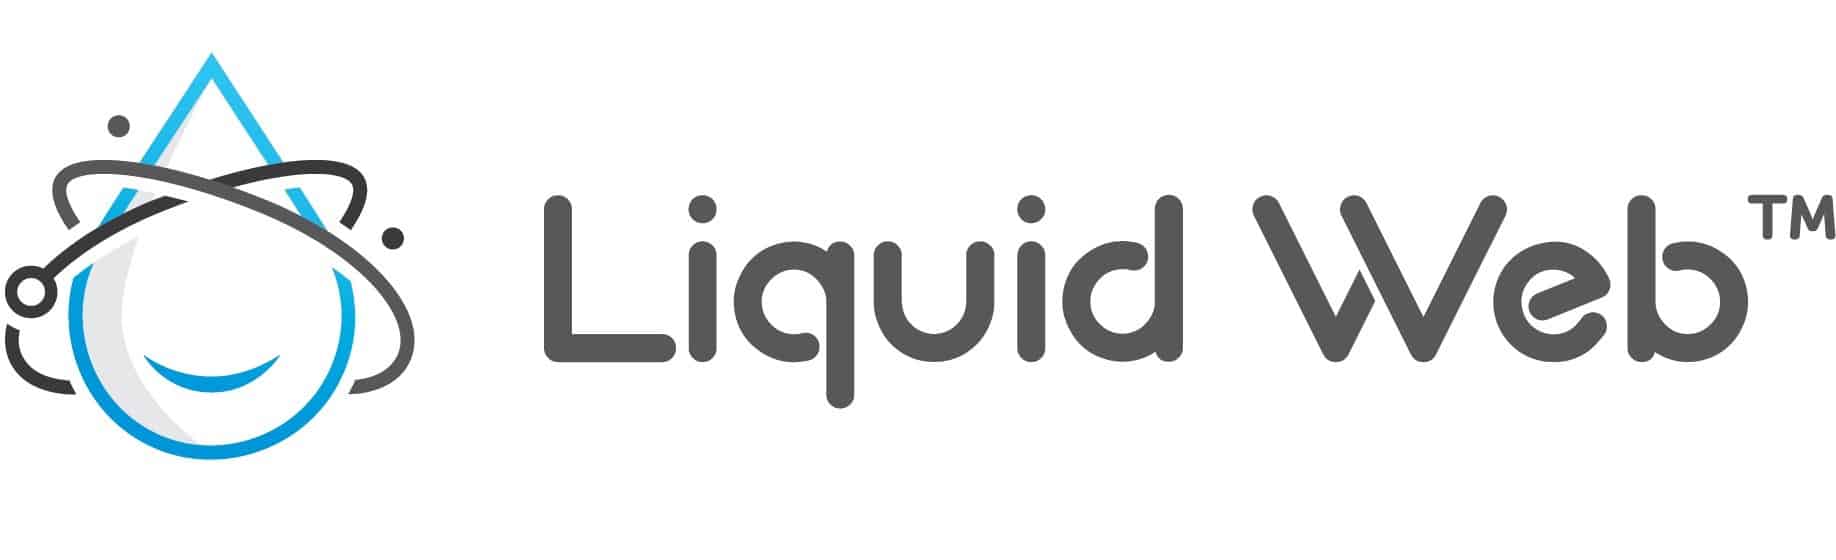 Liquid Web Partner Program